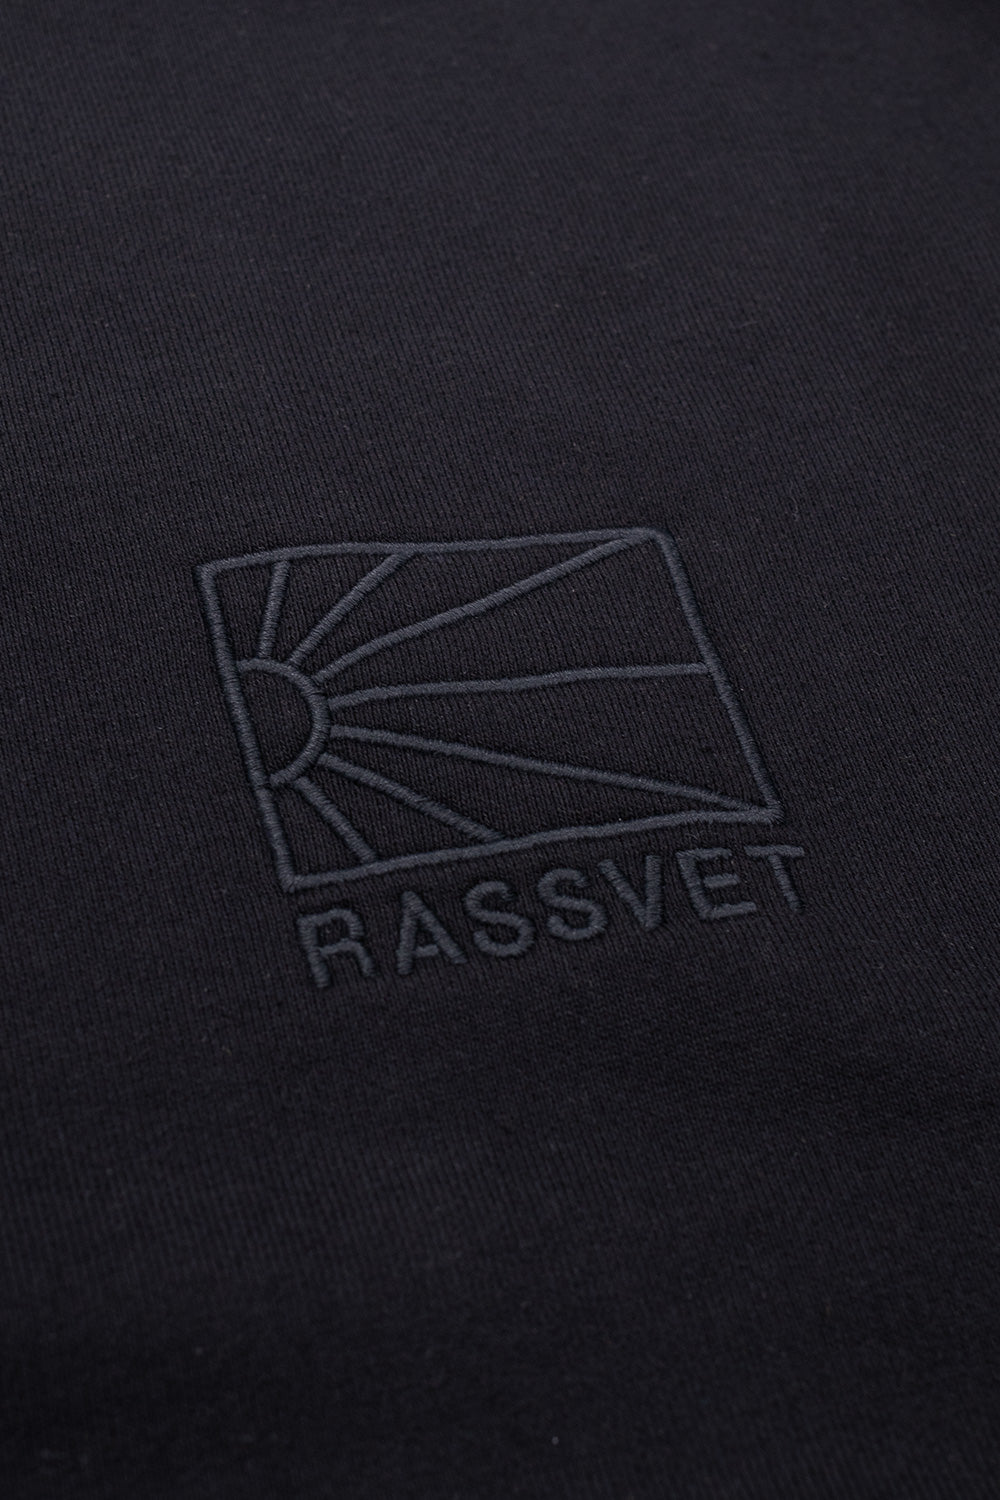 Rassvet (PACCBET) Mini Logo Crewneck Black - BONKERS